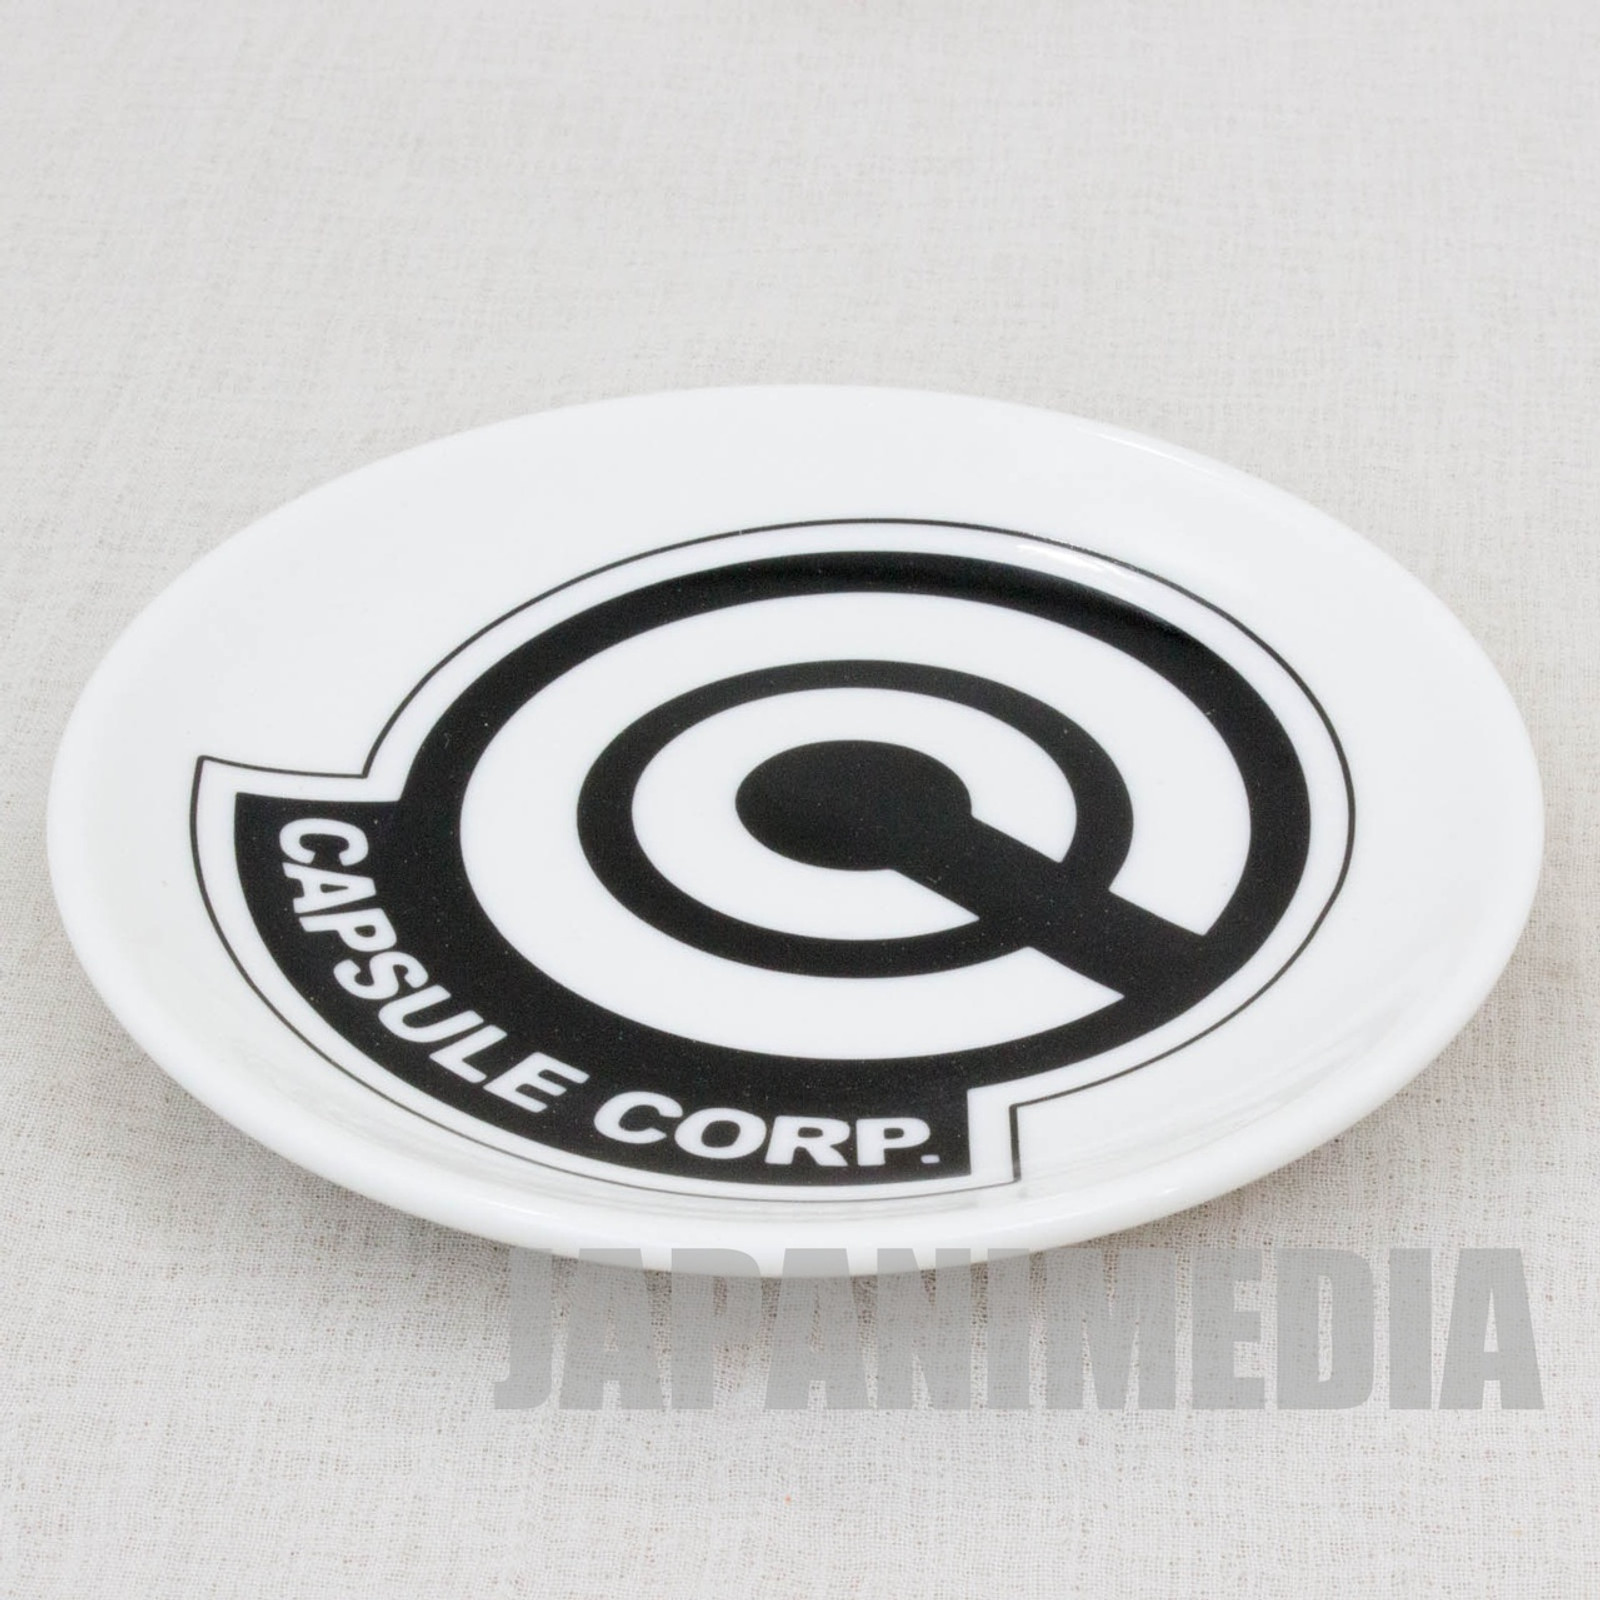 Dragon Ball SUPER Small Plate Dish Capsule Corp. Mark JAPAN ANIME